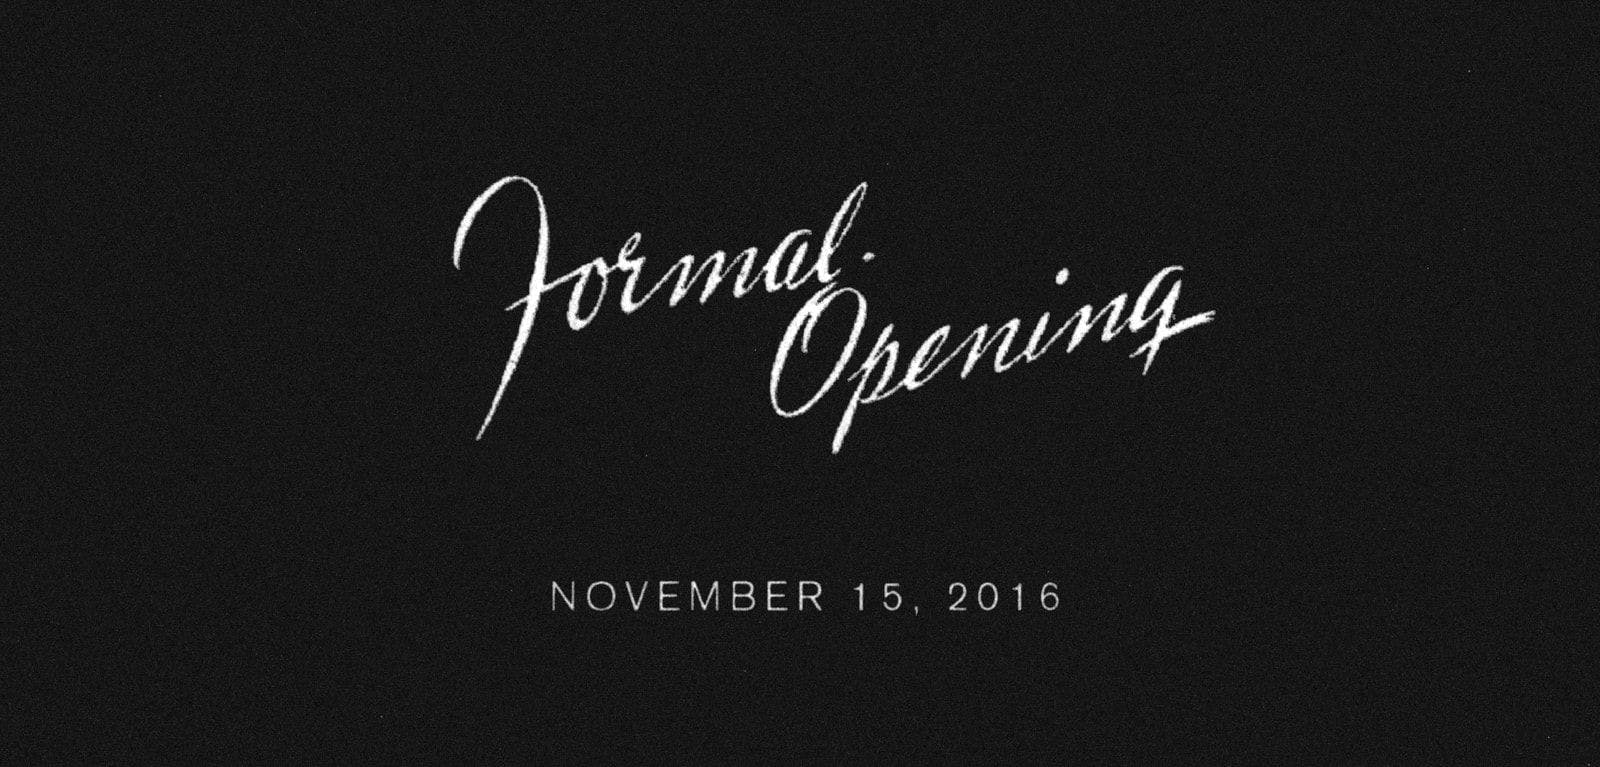 Formal opening, November 15, 2016